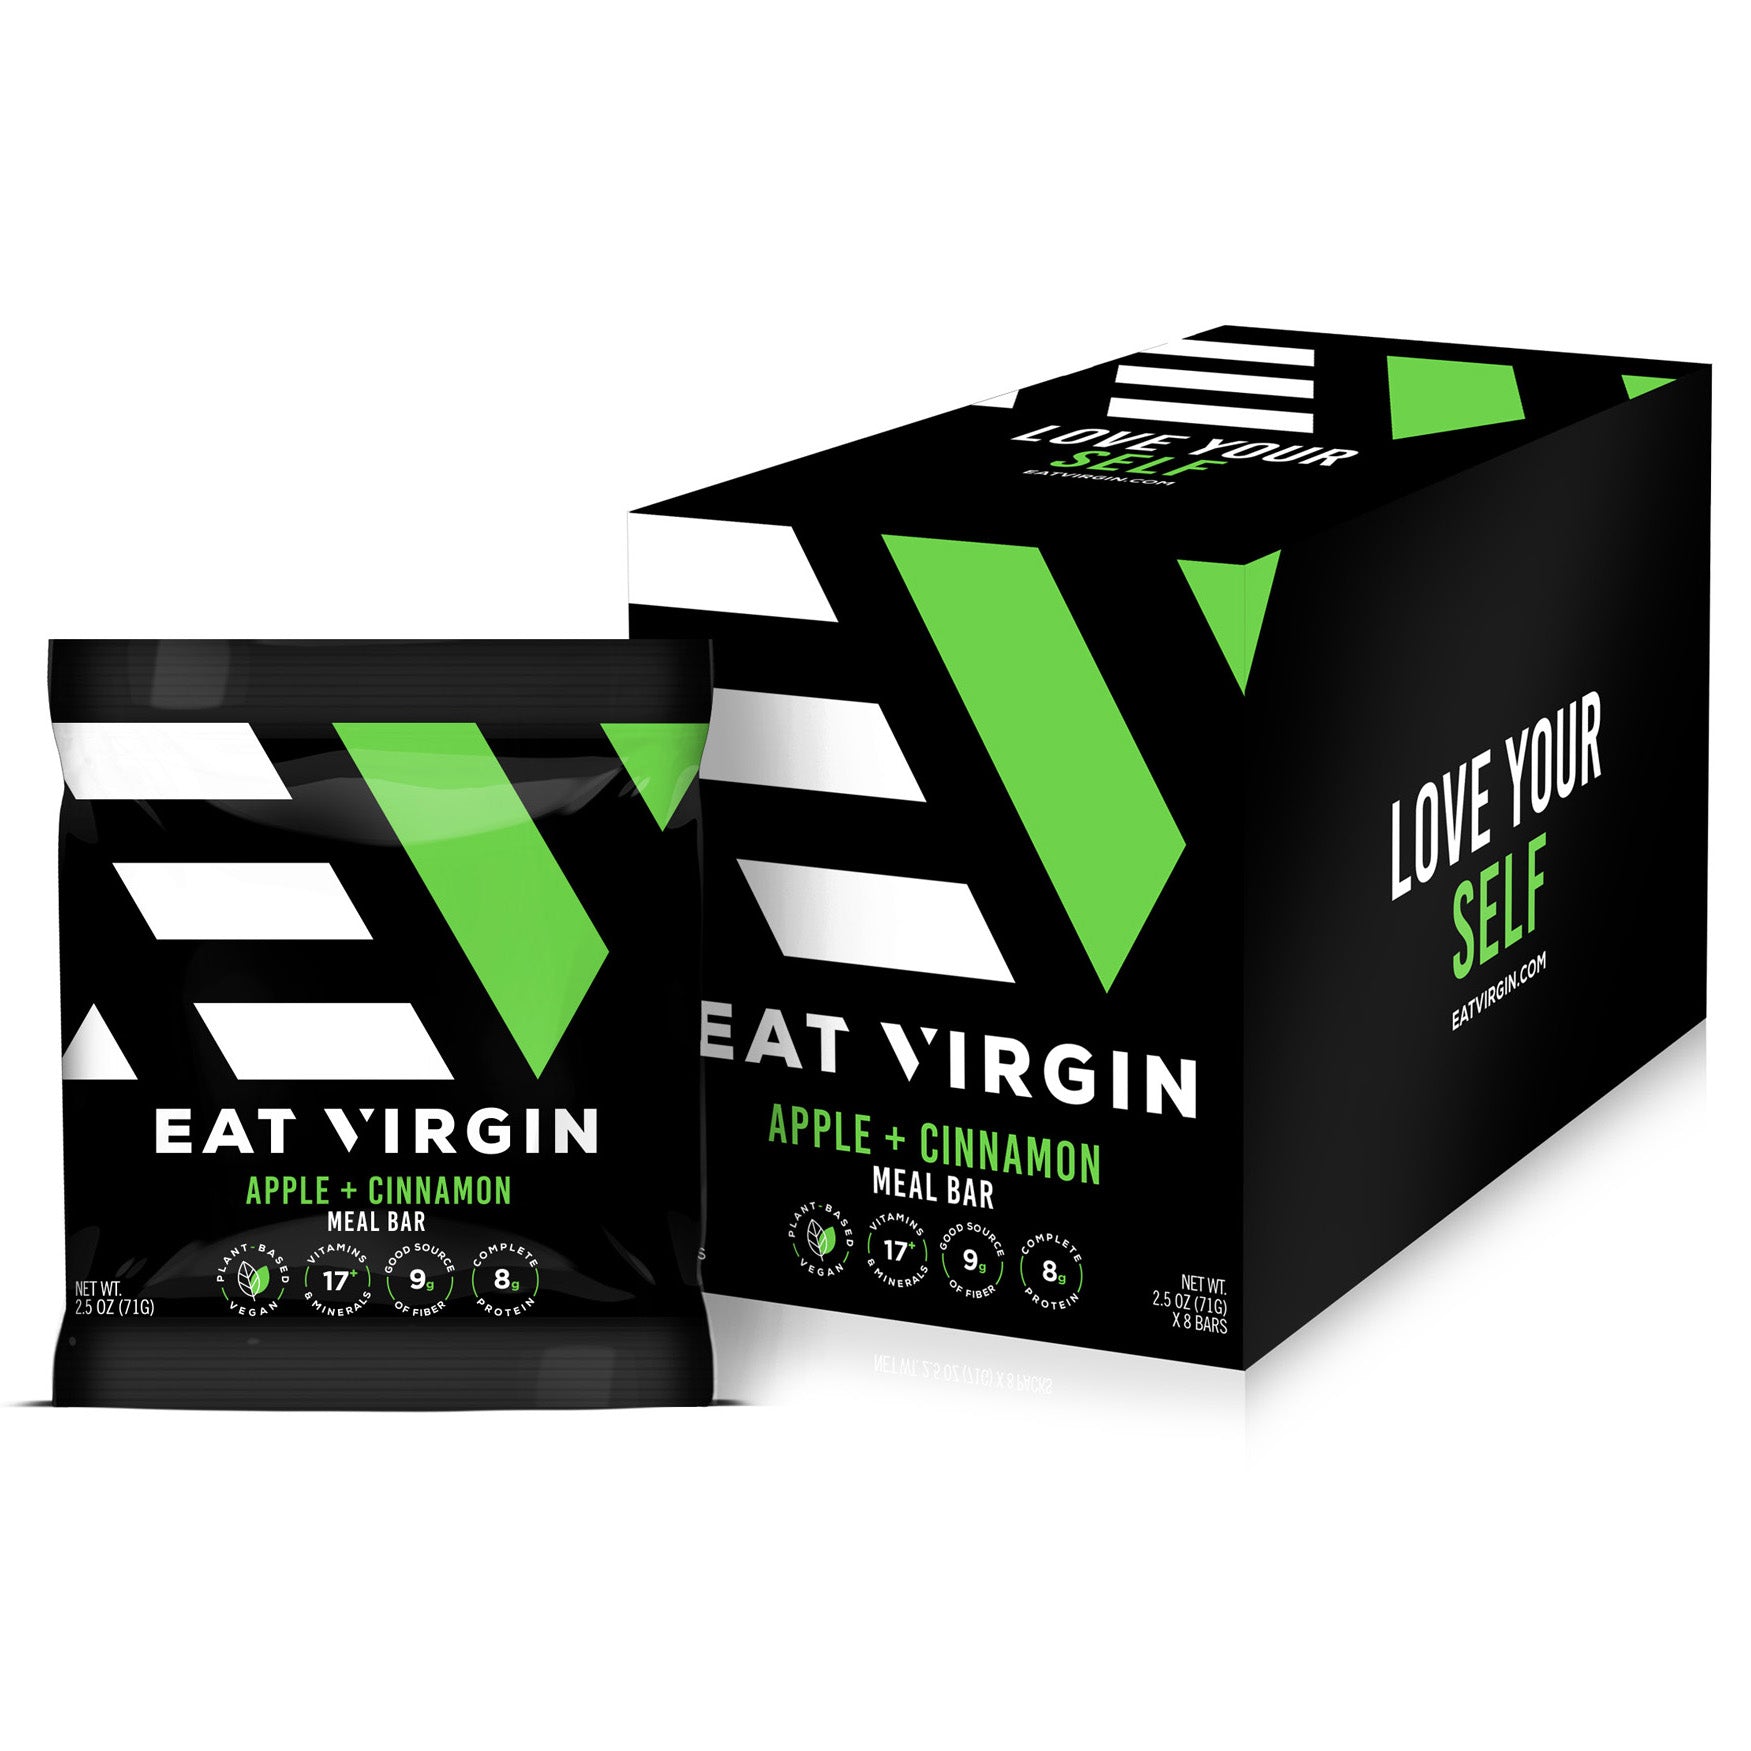 Eat Virgin Meal Bar